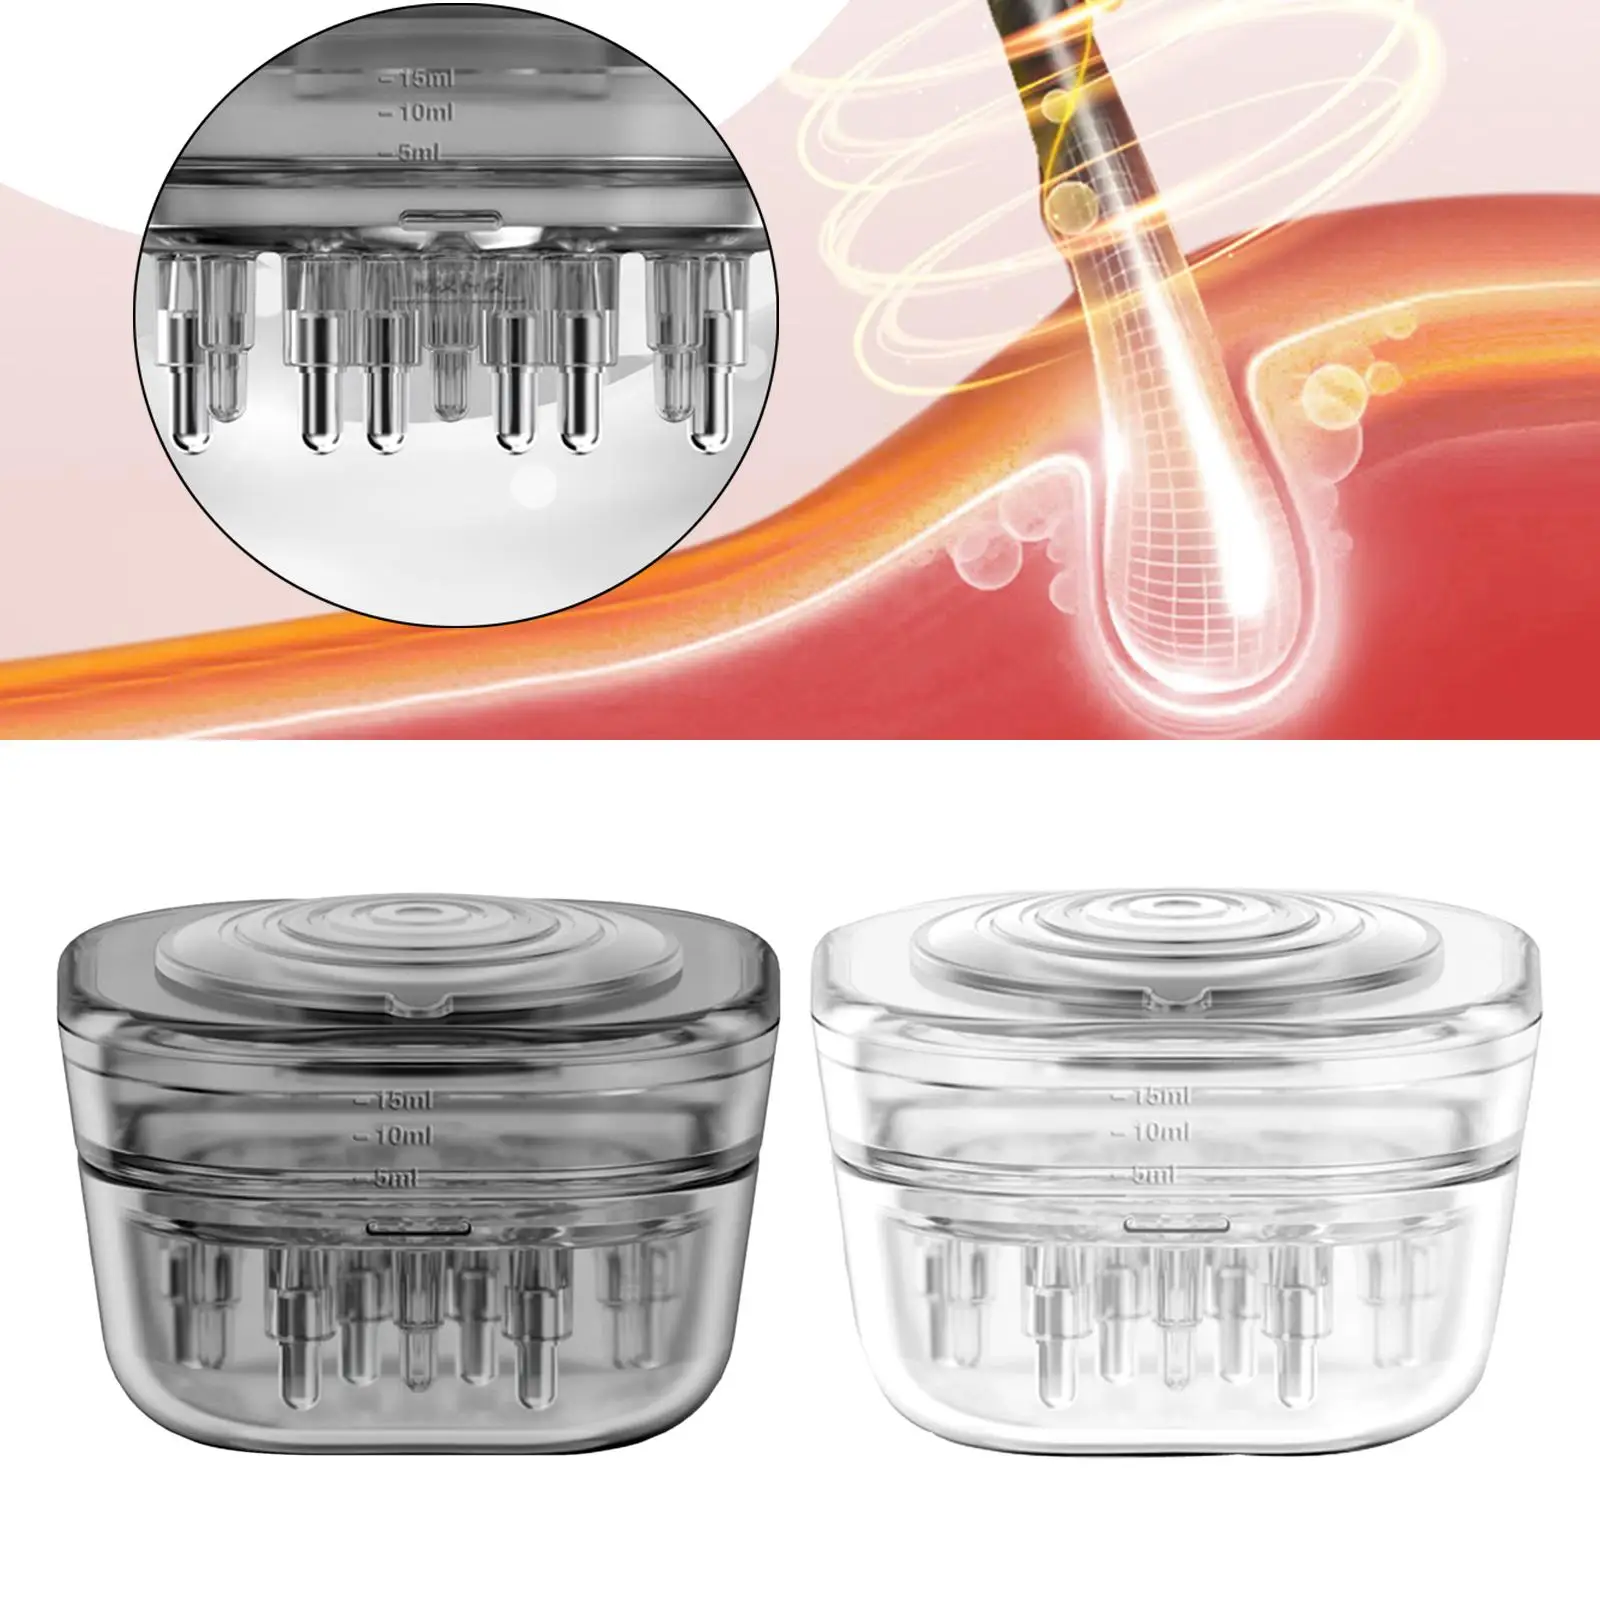 Portable Scalp Applicator Comb Rolling Ball Reusable PP Hair Brush Hair Applicator for essential Oil Hair